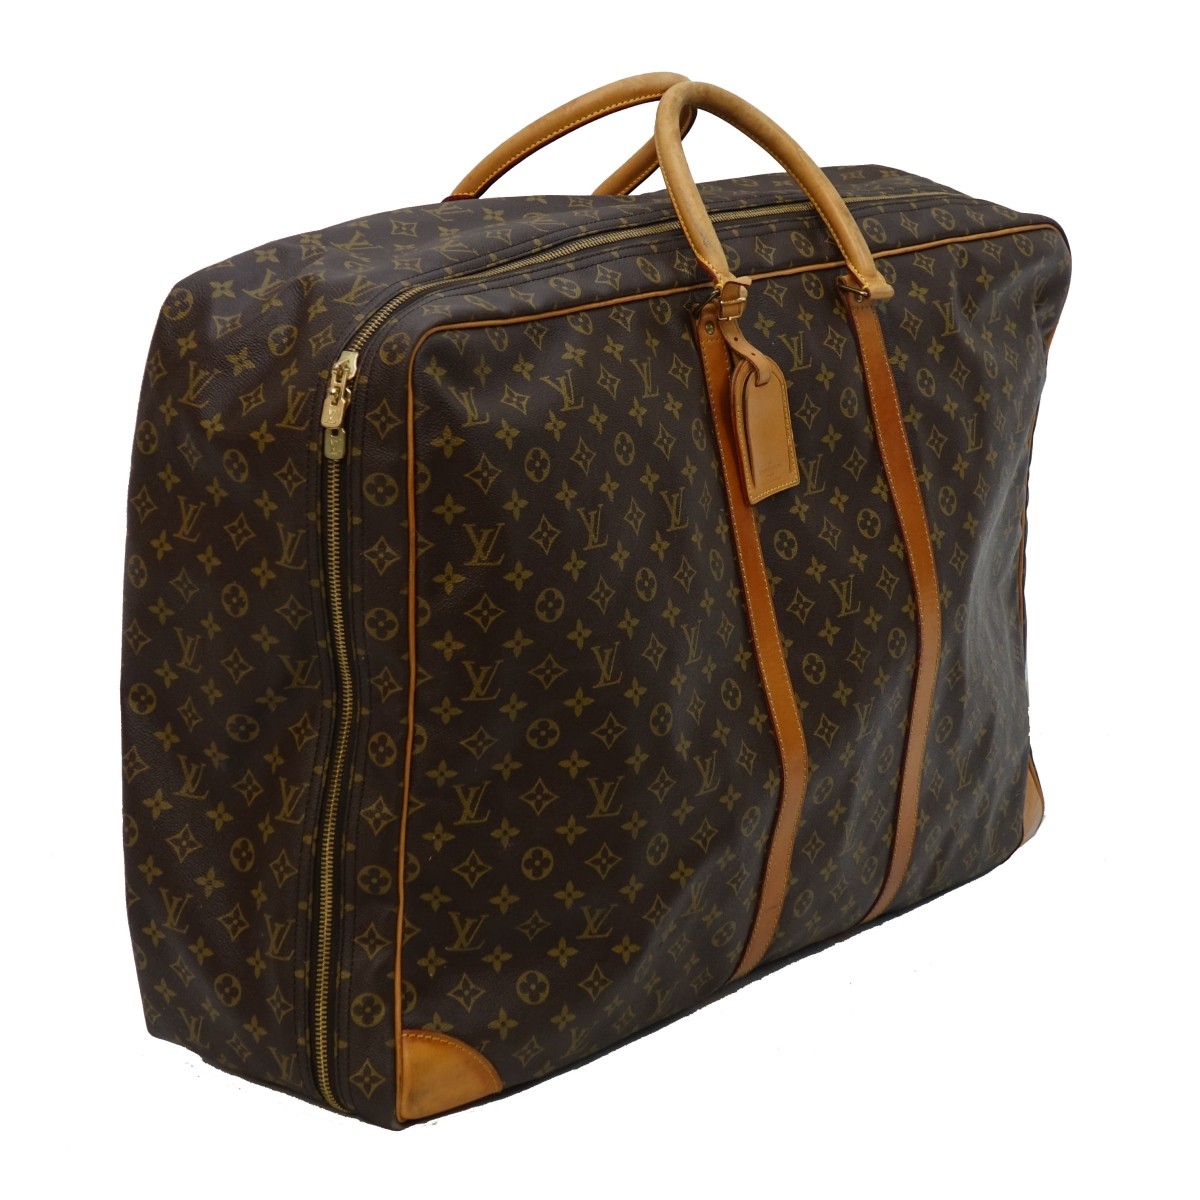 Louis Vuitton Sirius Suitcase